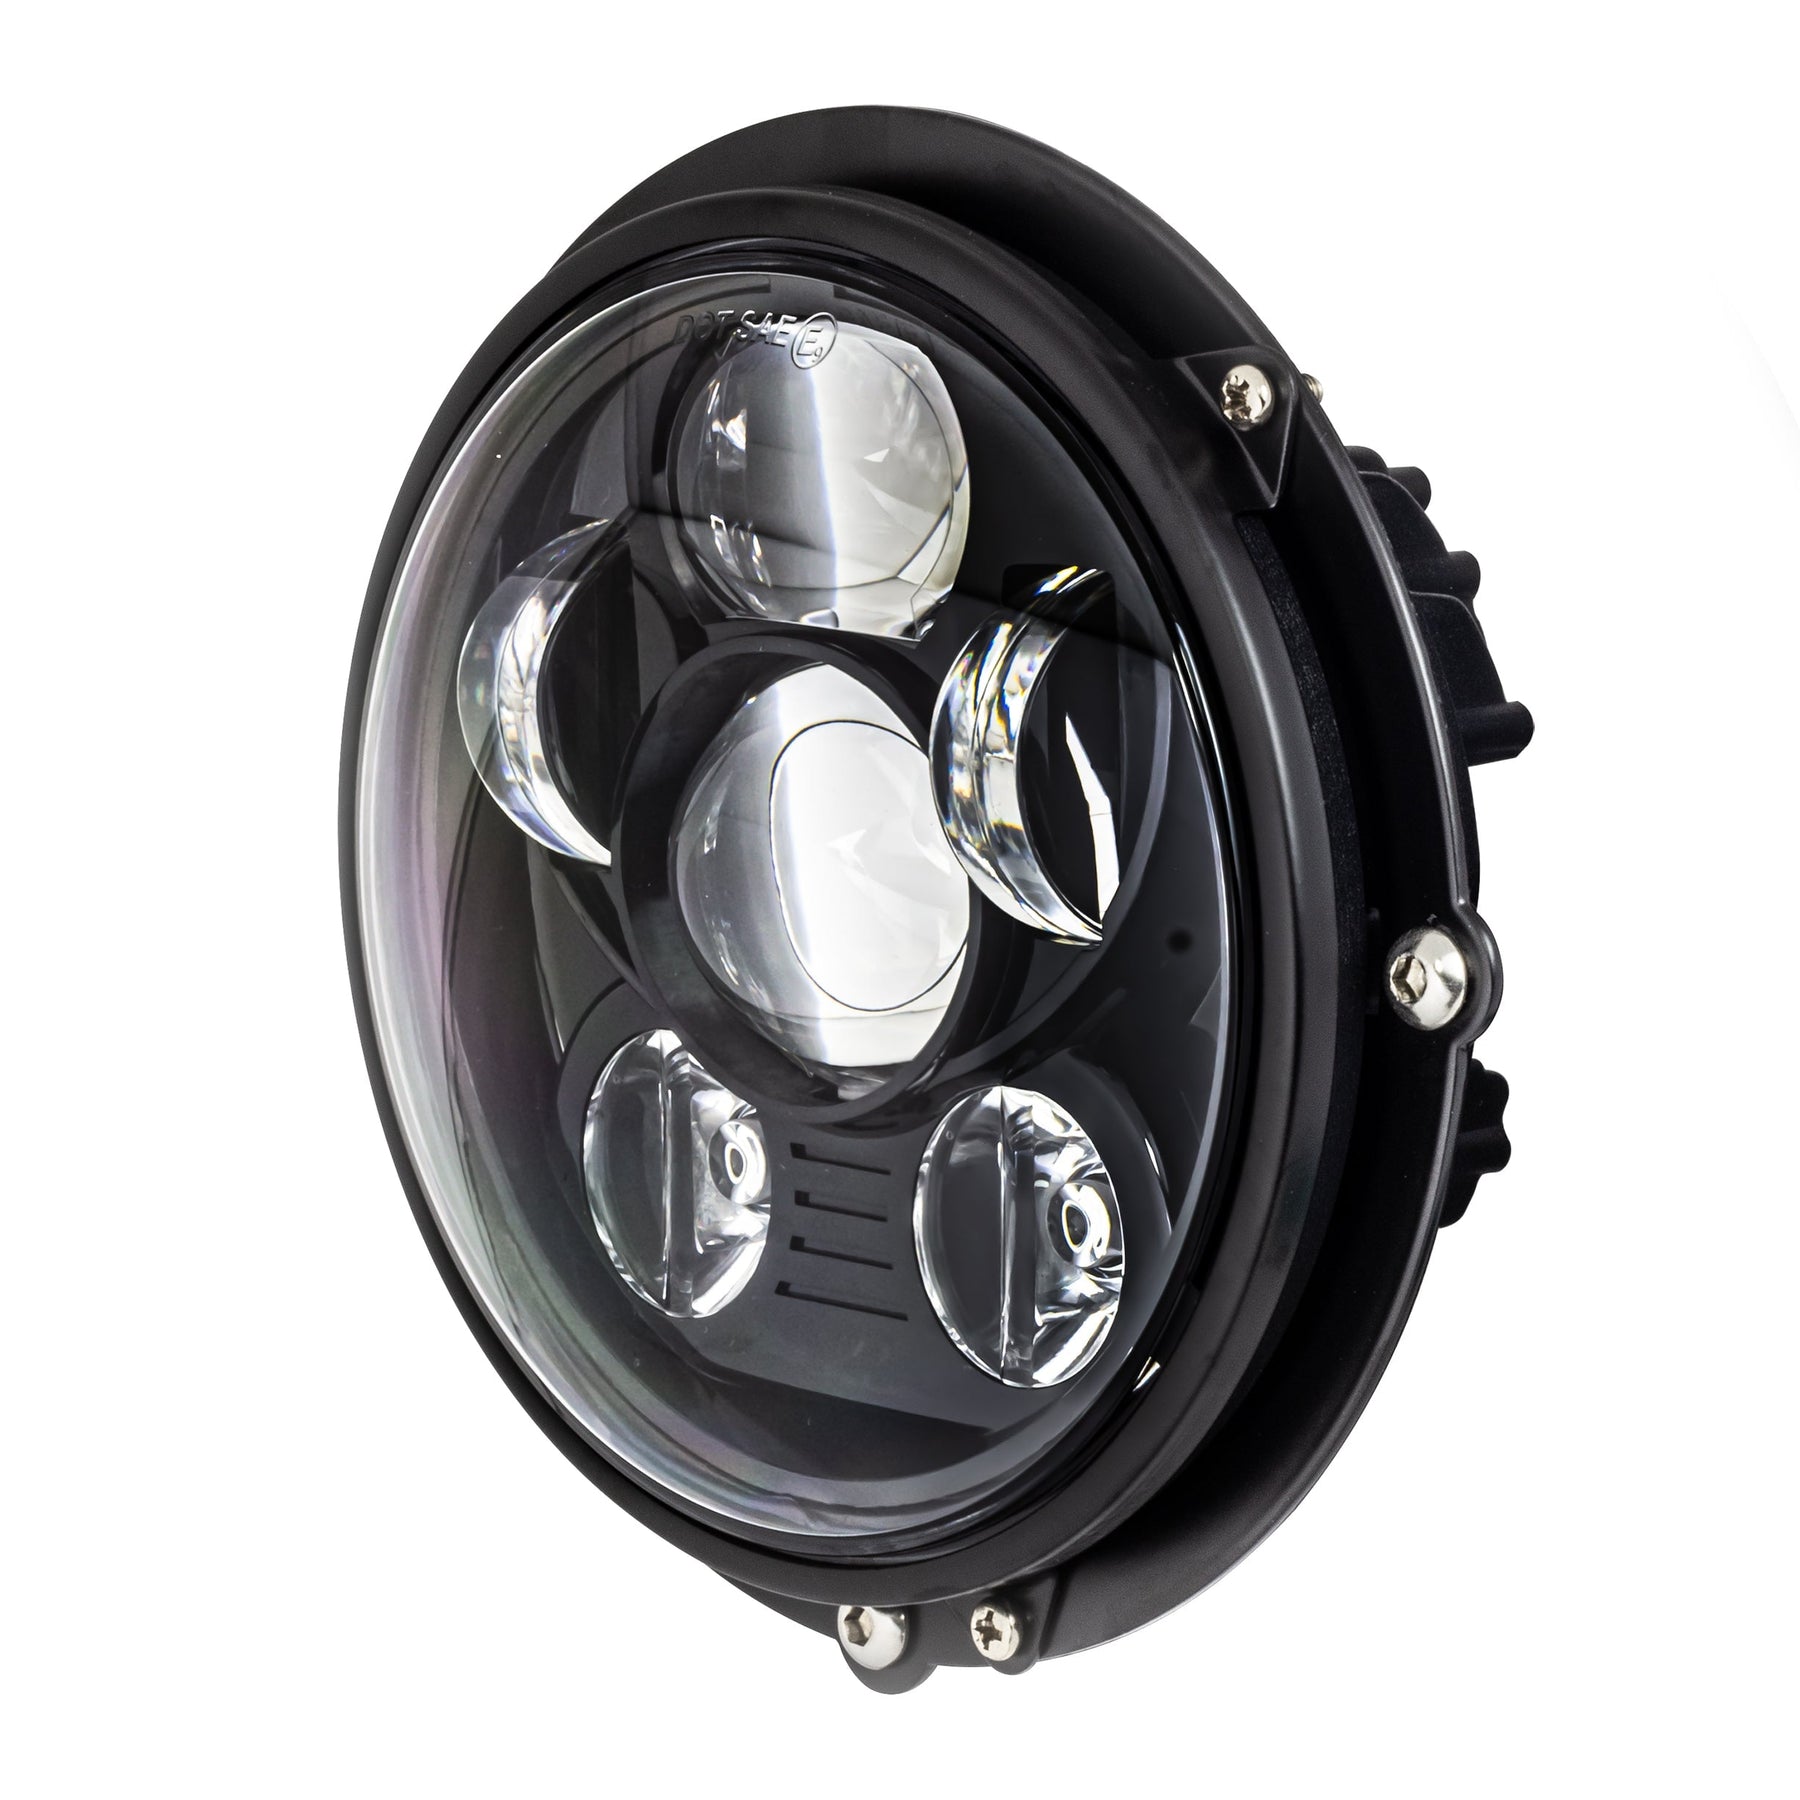 Eagle Lights 5 3/4 Generation III LED Headlight Kit for Harley Davids